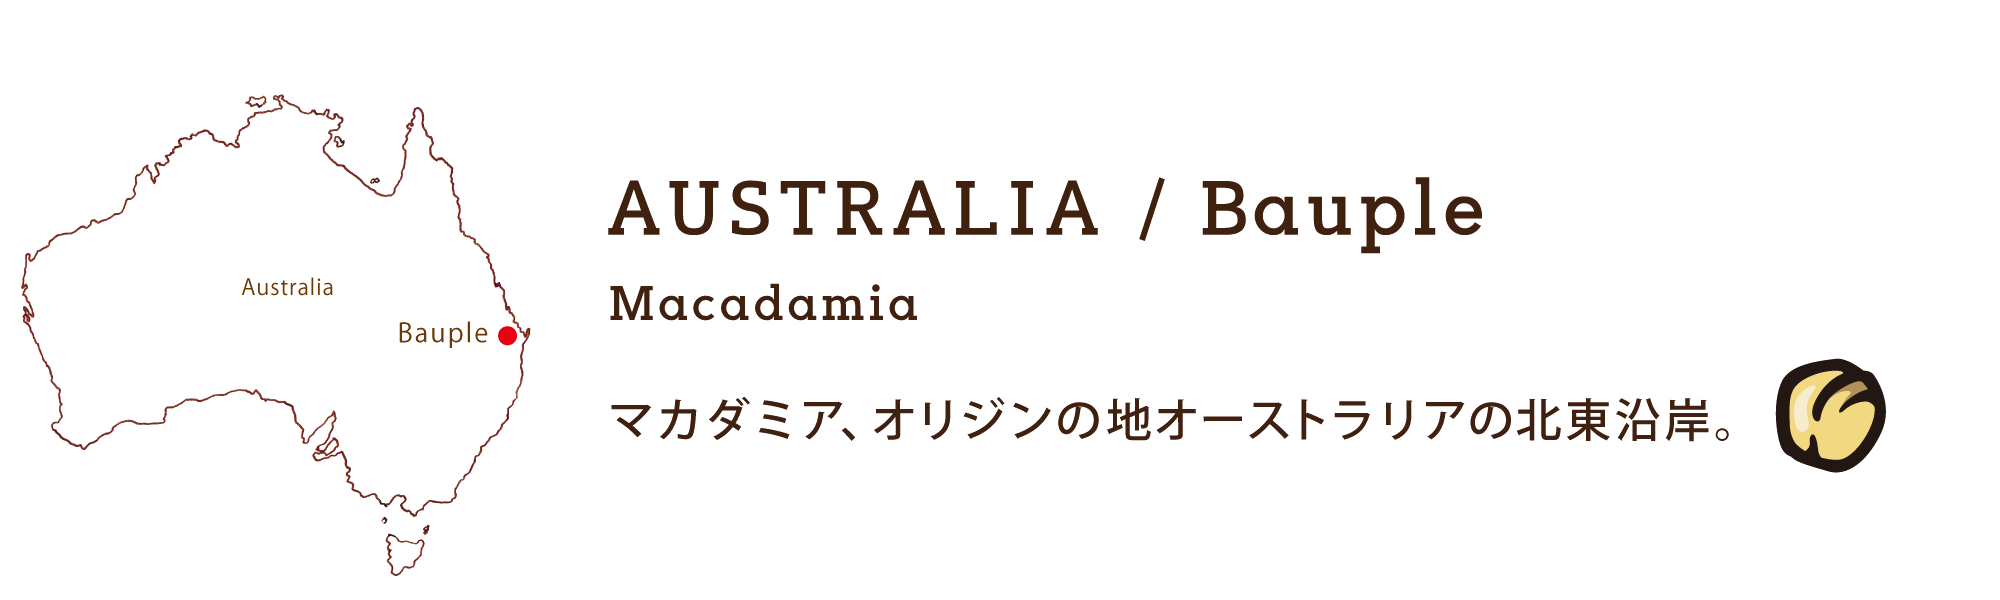 AUSTRALIA / Bauple